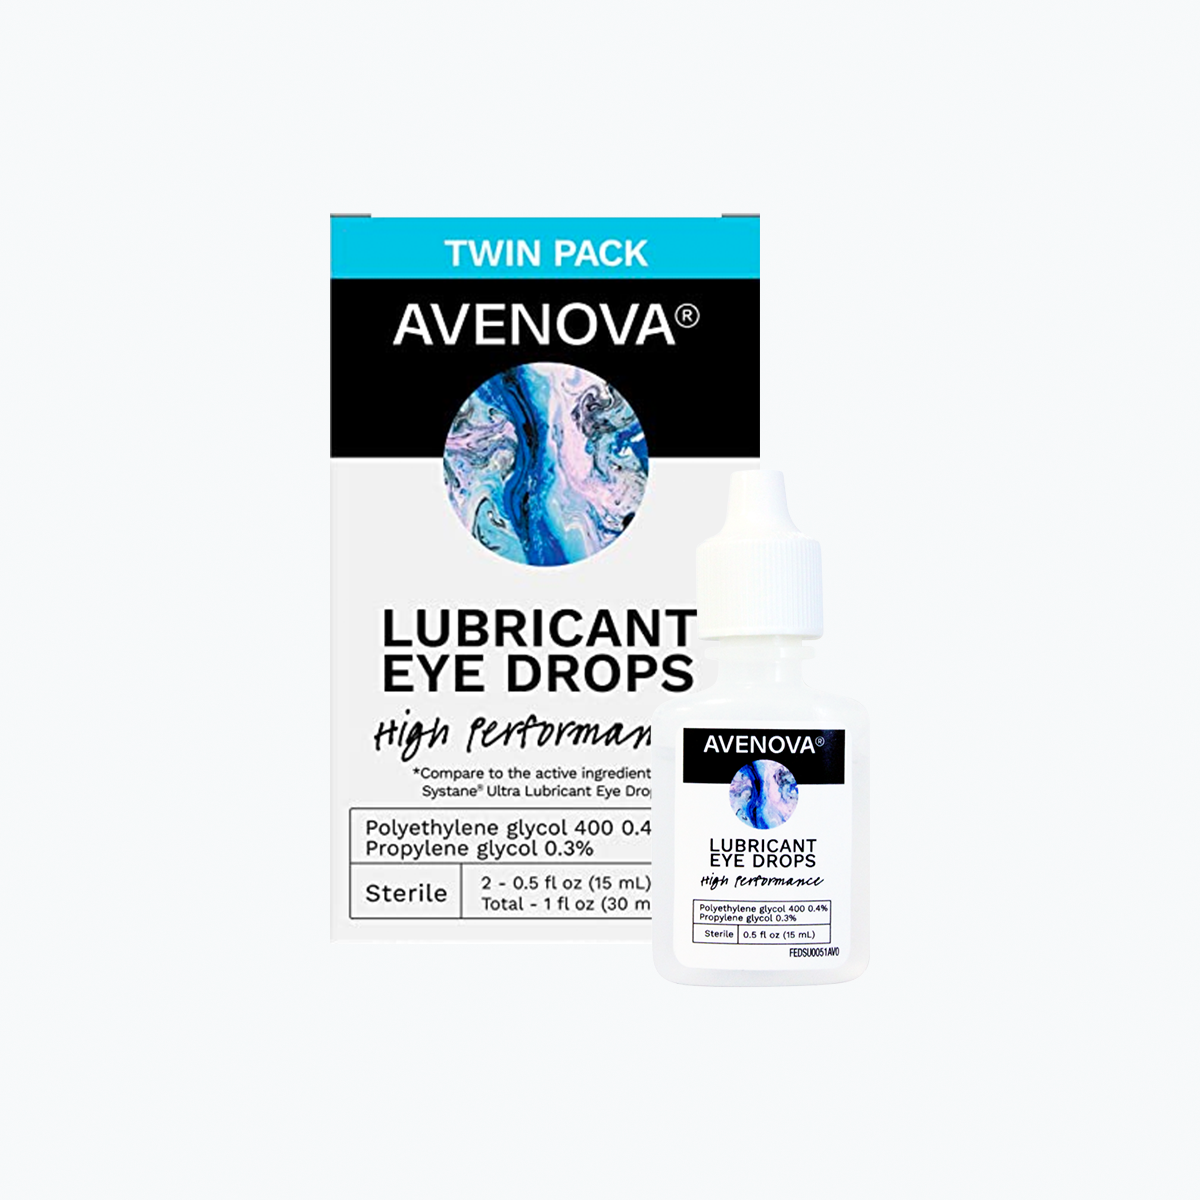 Avenova Lubricant Eye Drops (Twin Pack) 15ml Bottles